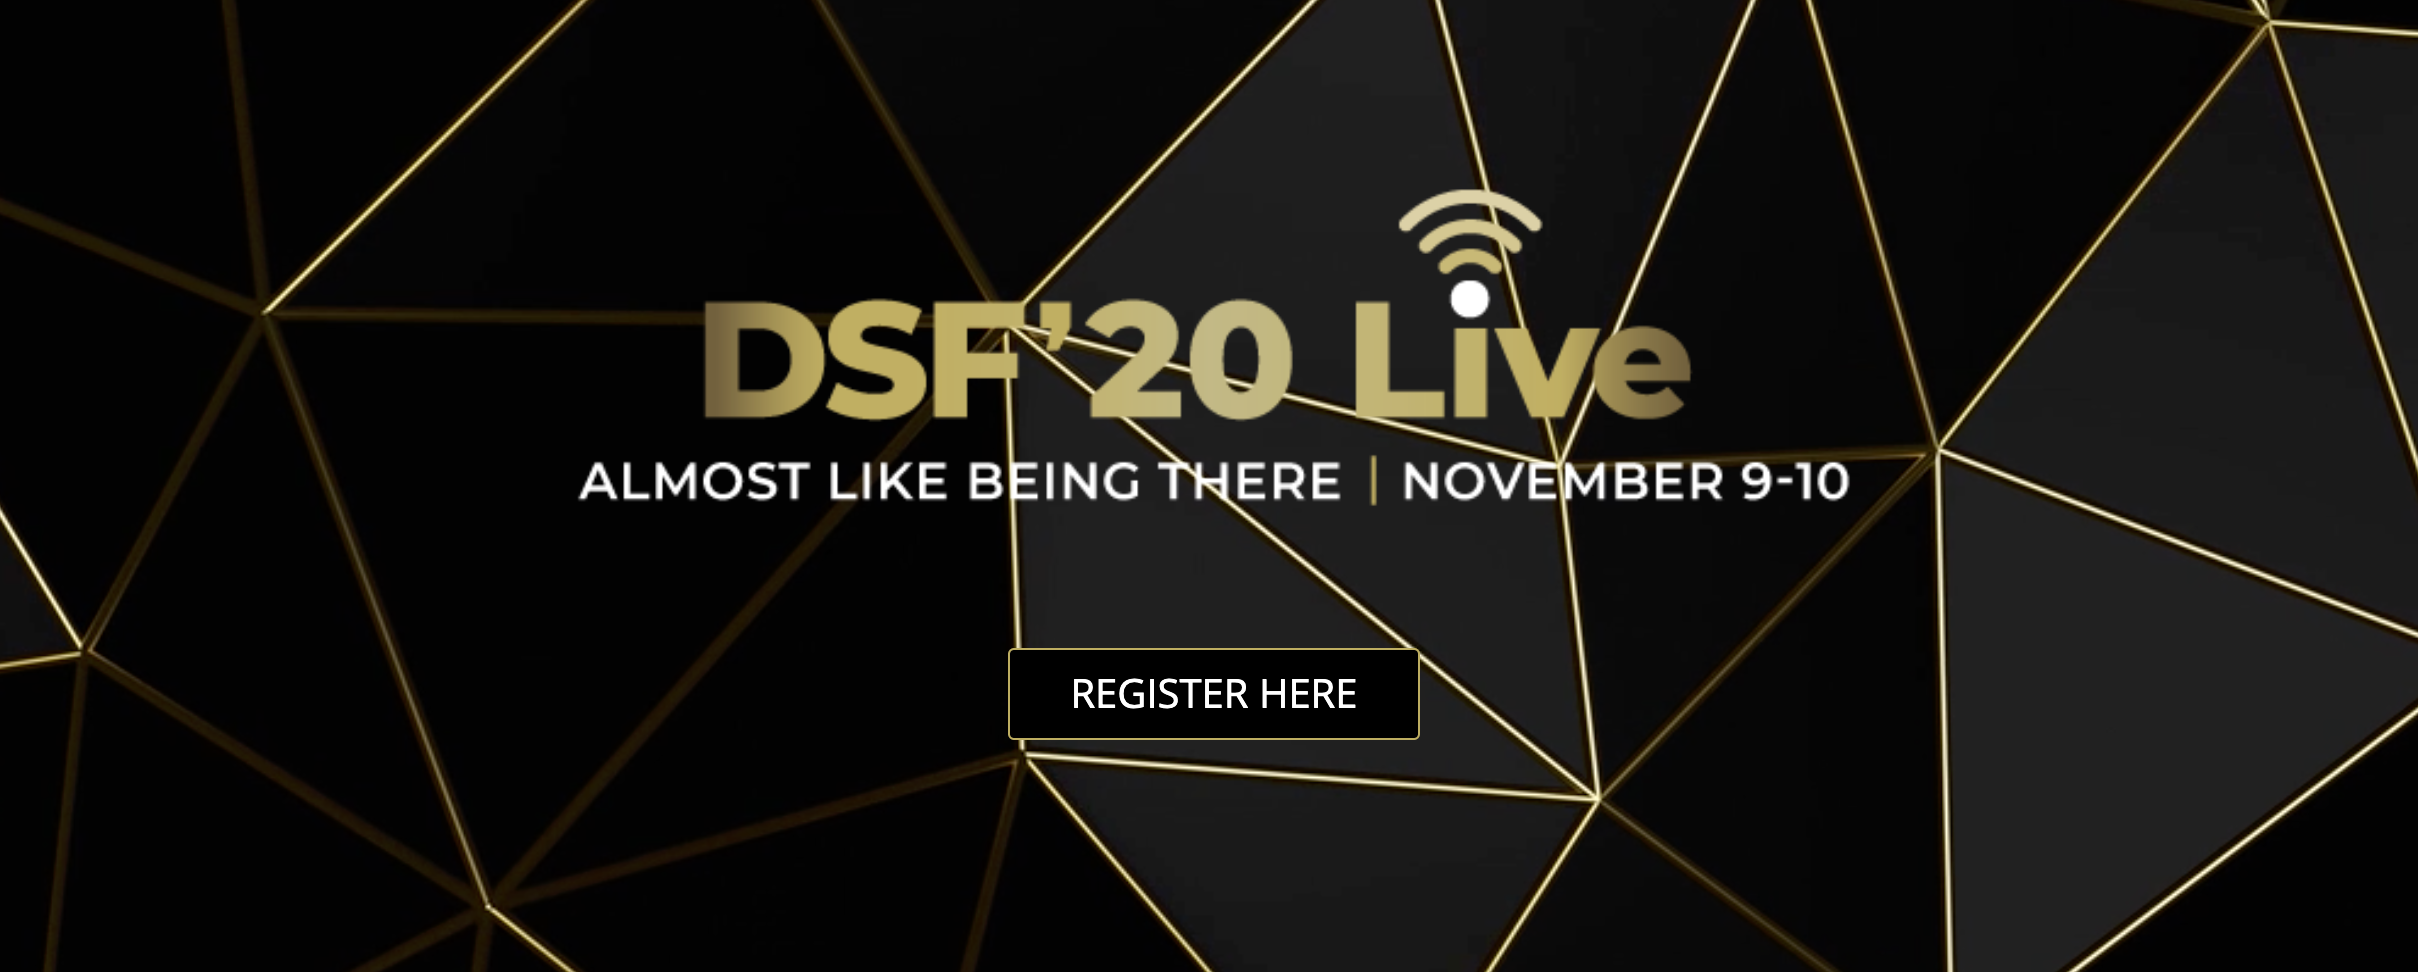 DSF 2020 Live